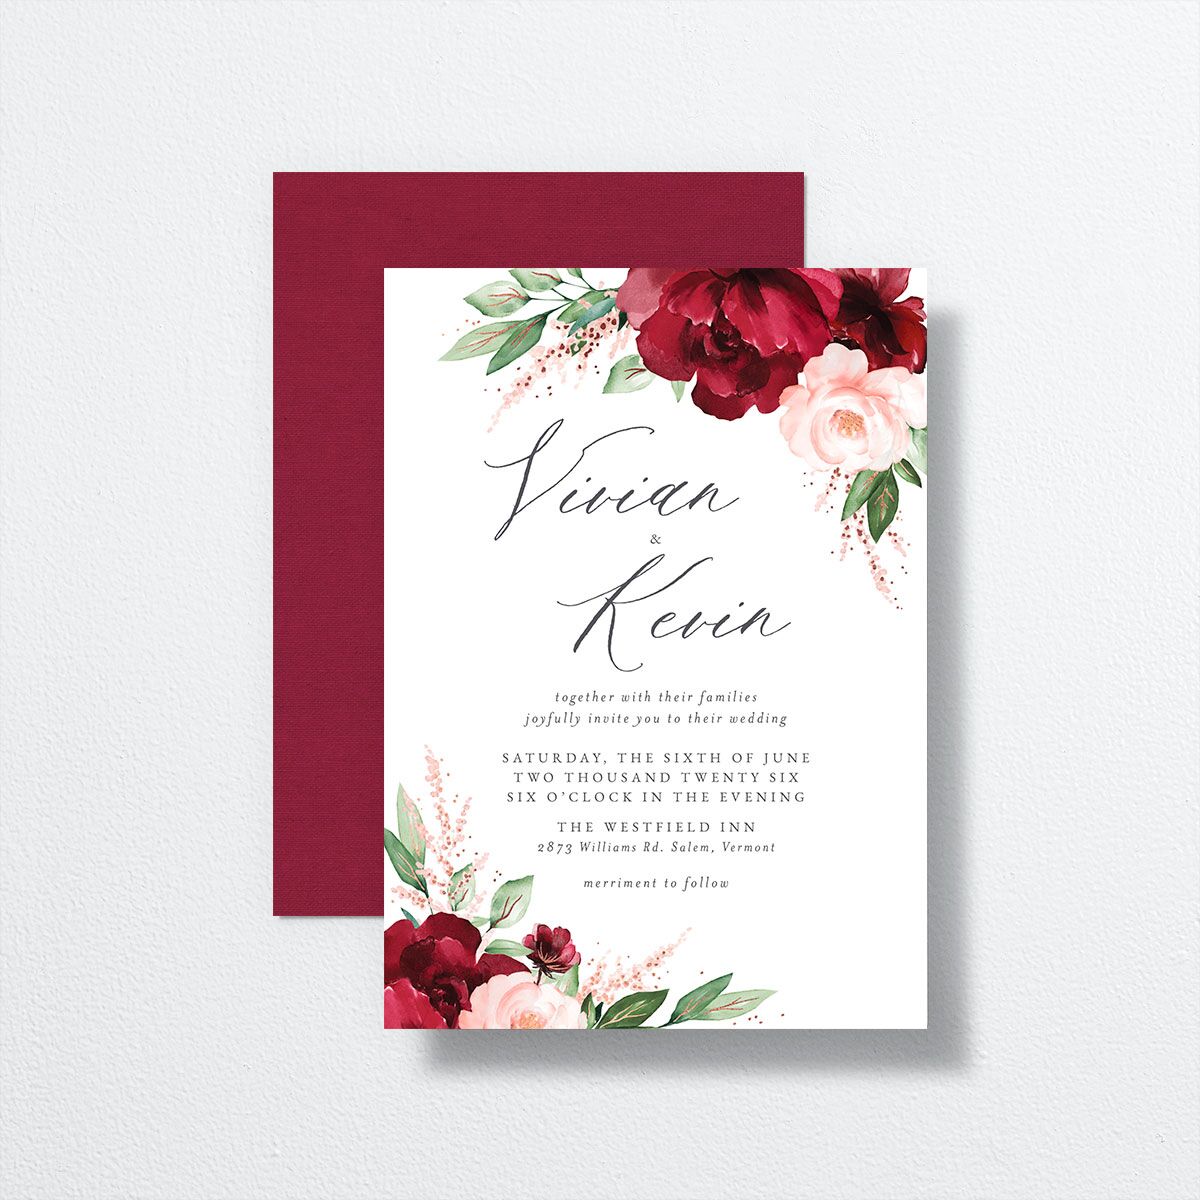 Beloved Floral Foil Wedding Invitations front-and-back in red